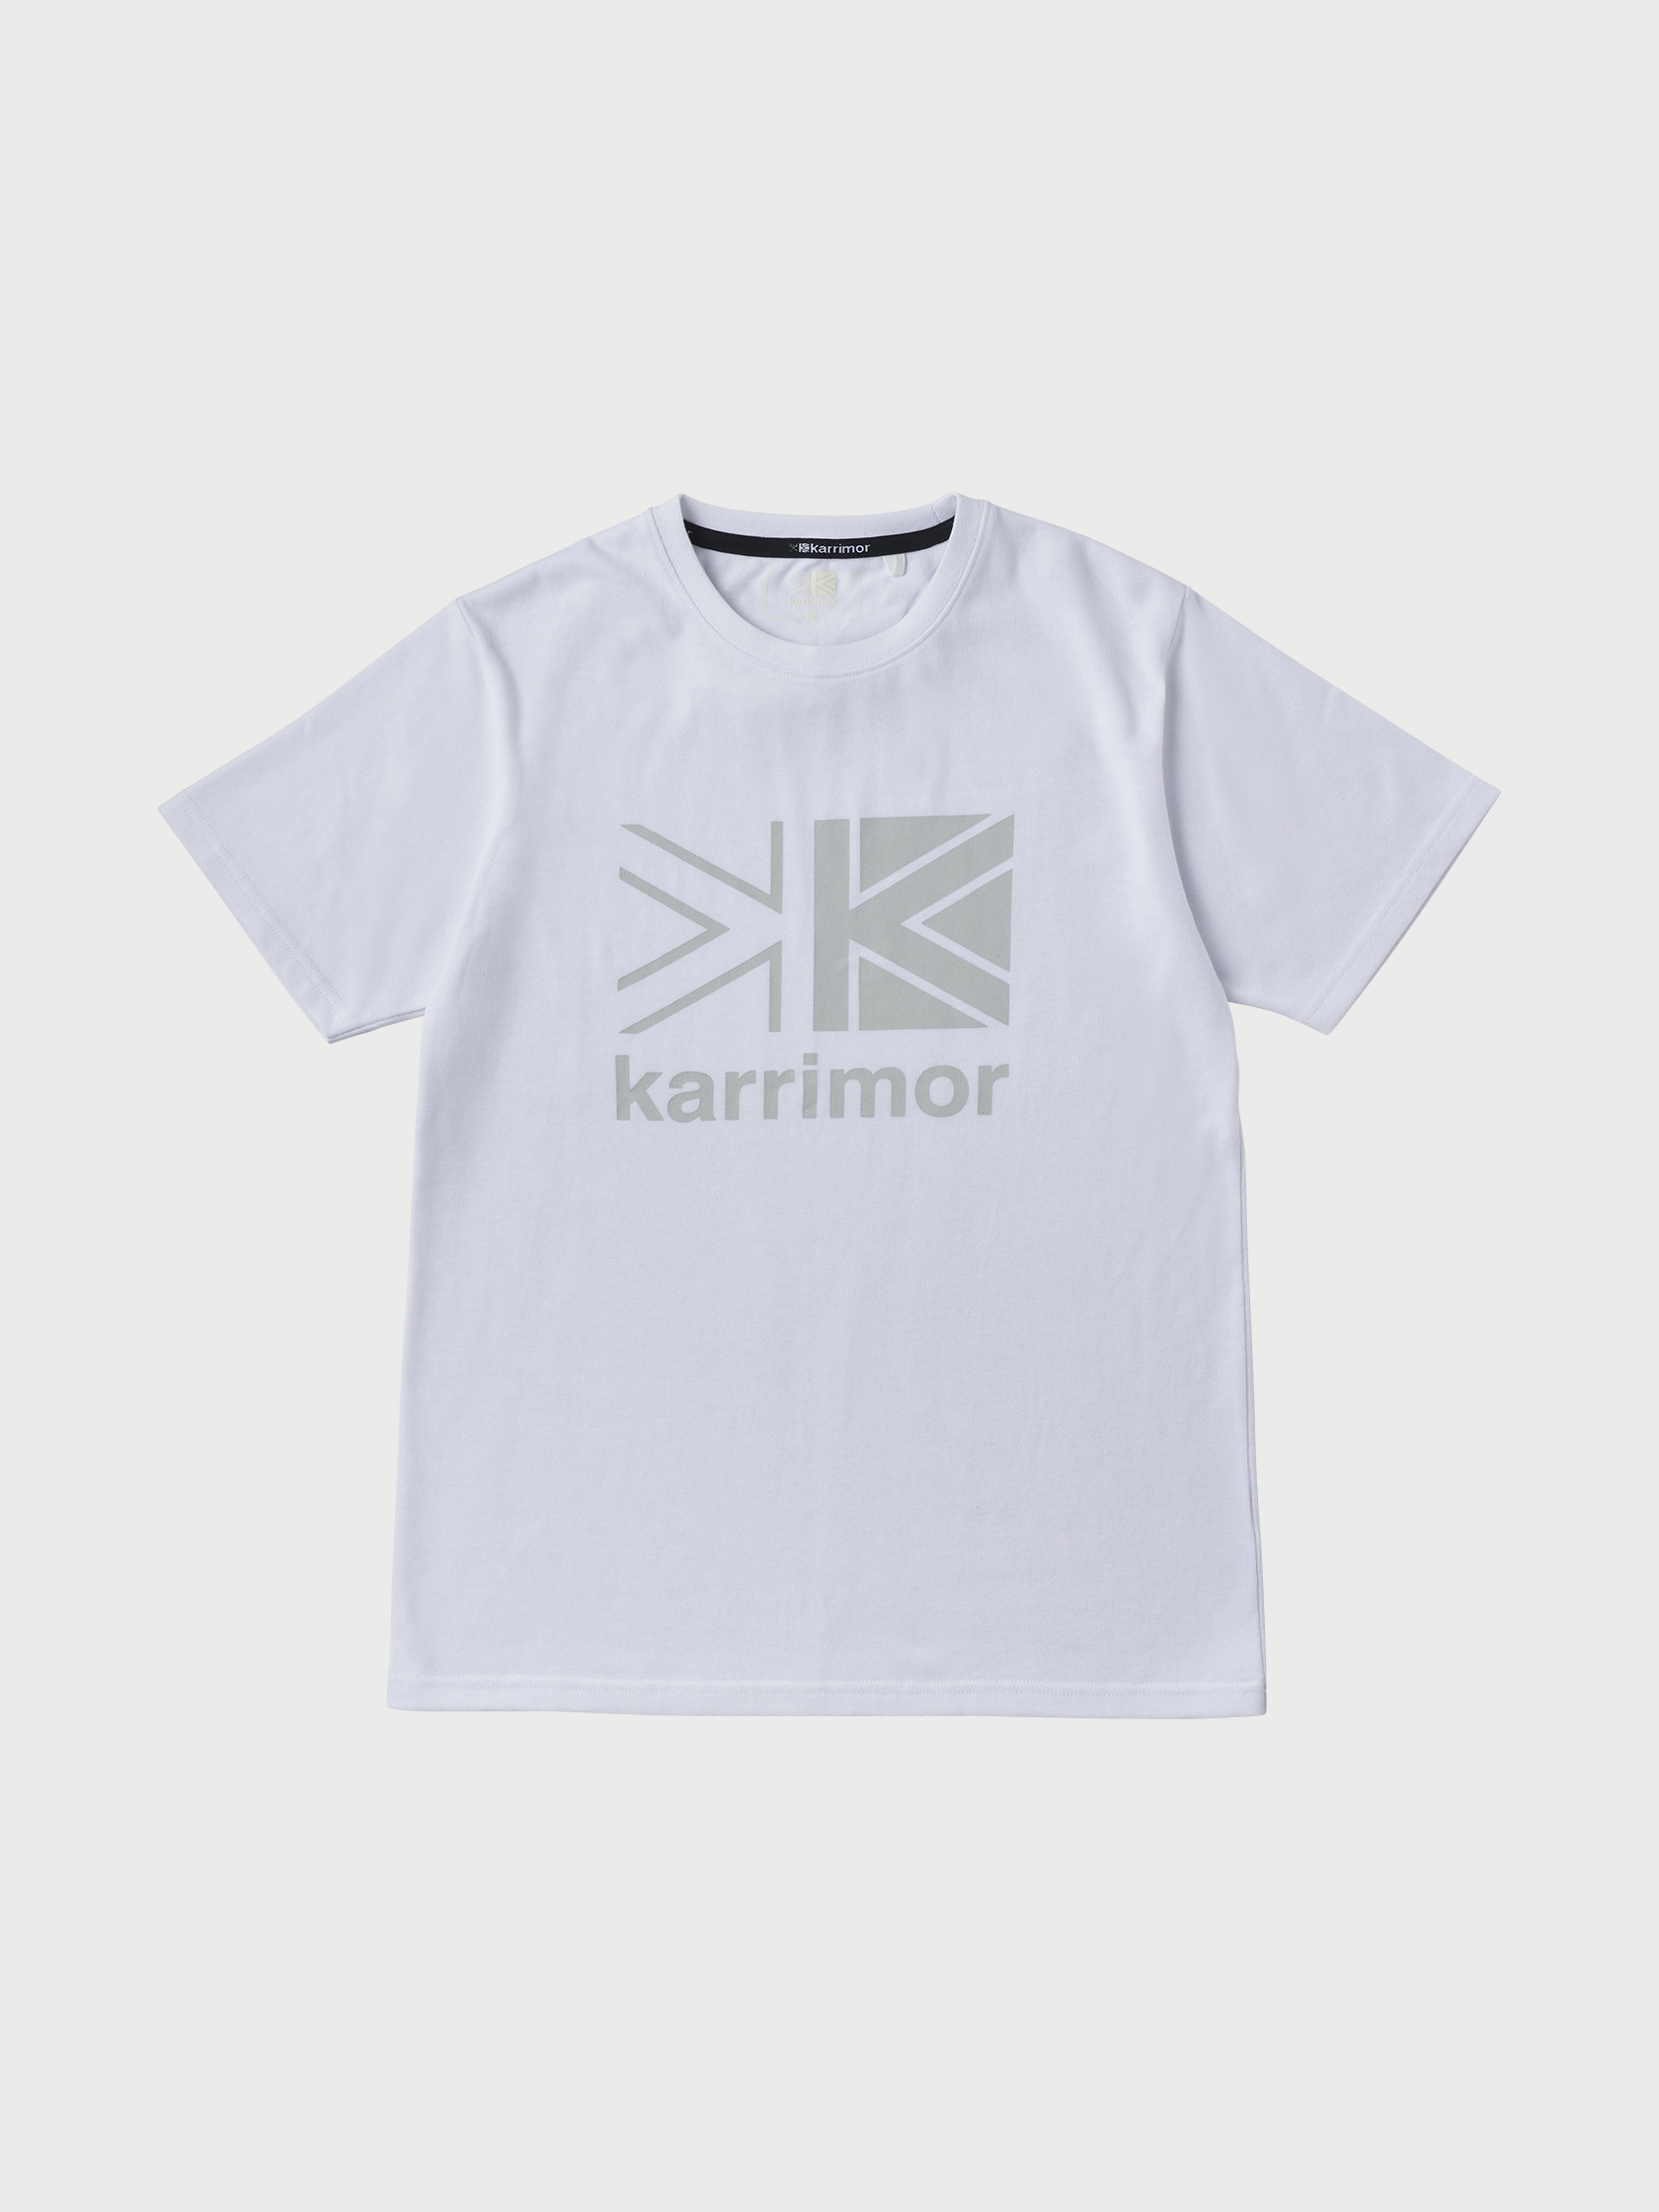 logo S/S T | karrimor カリマー | リュックサック・アウトドアウェア